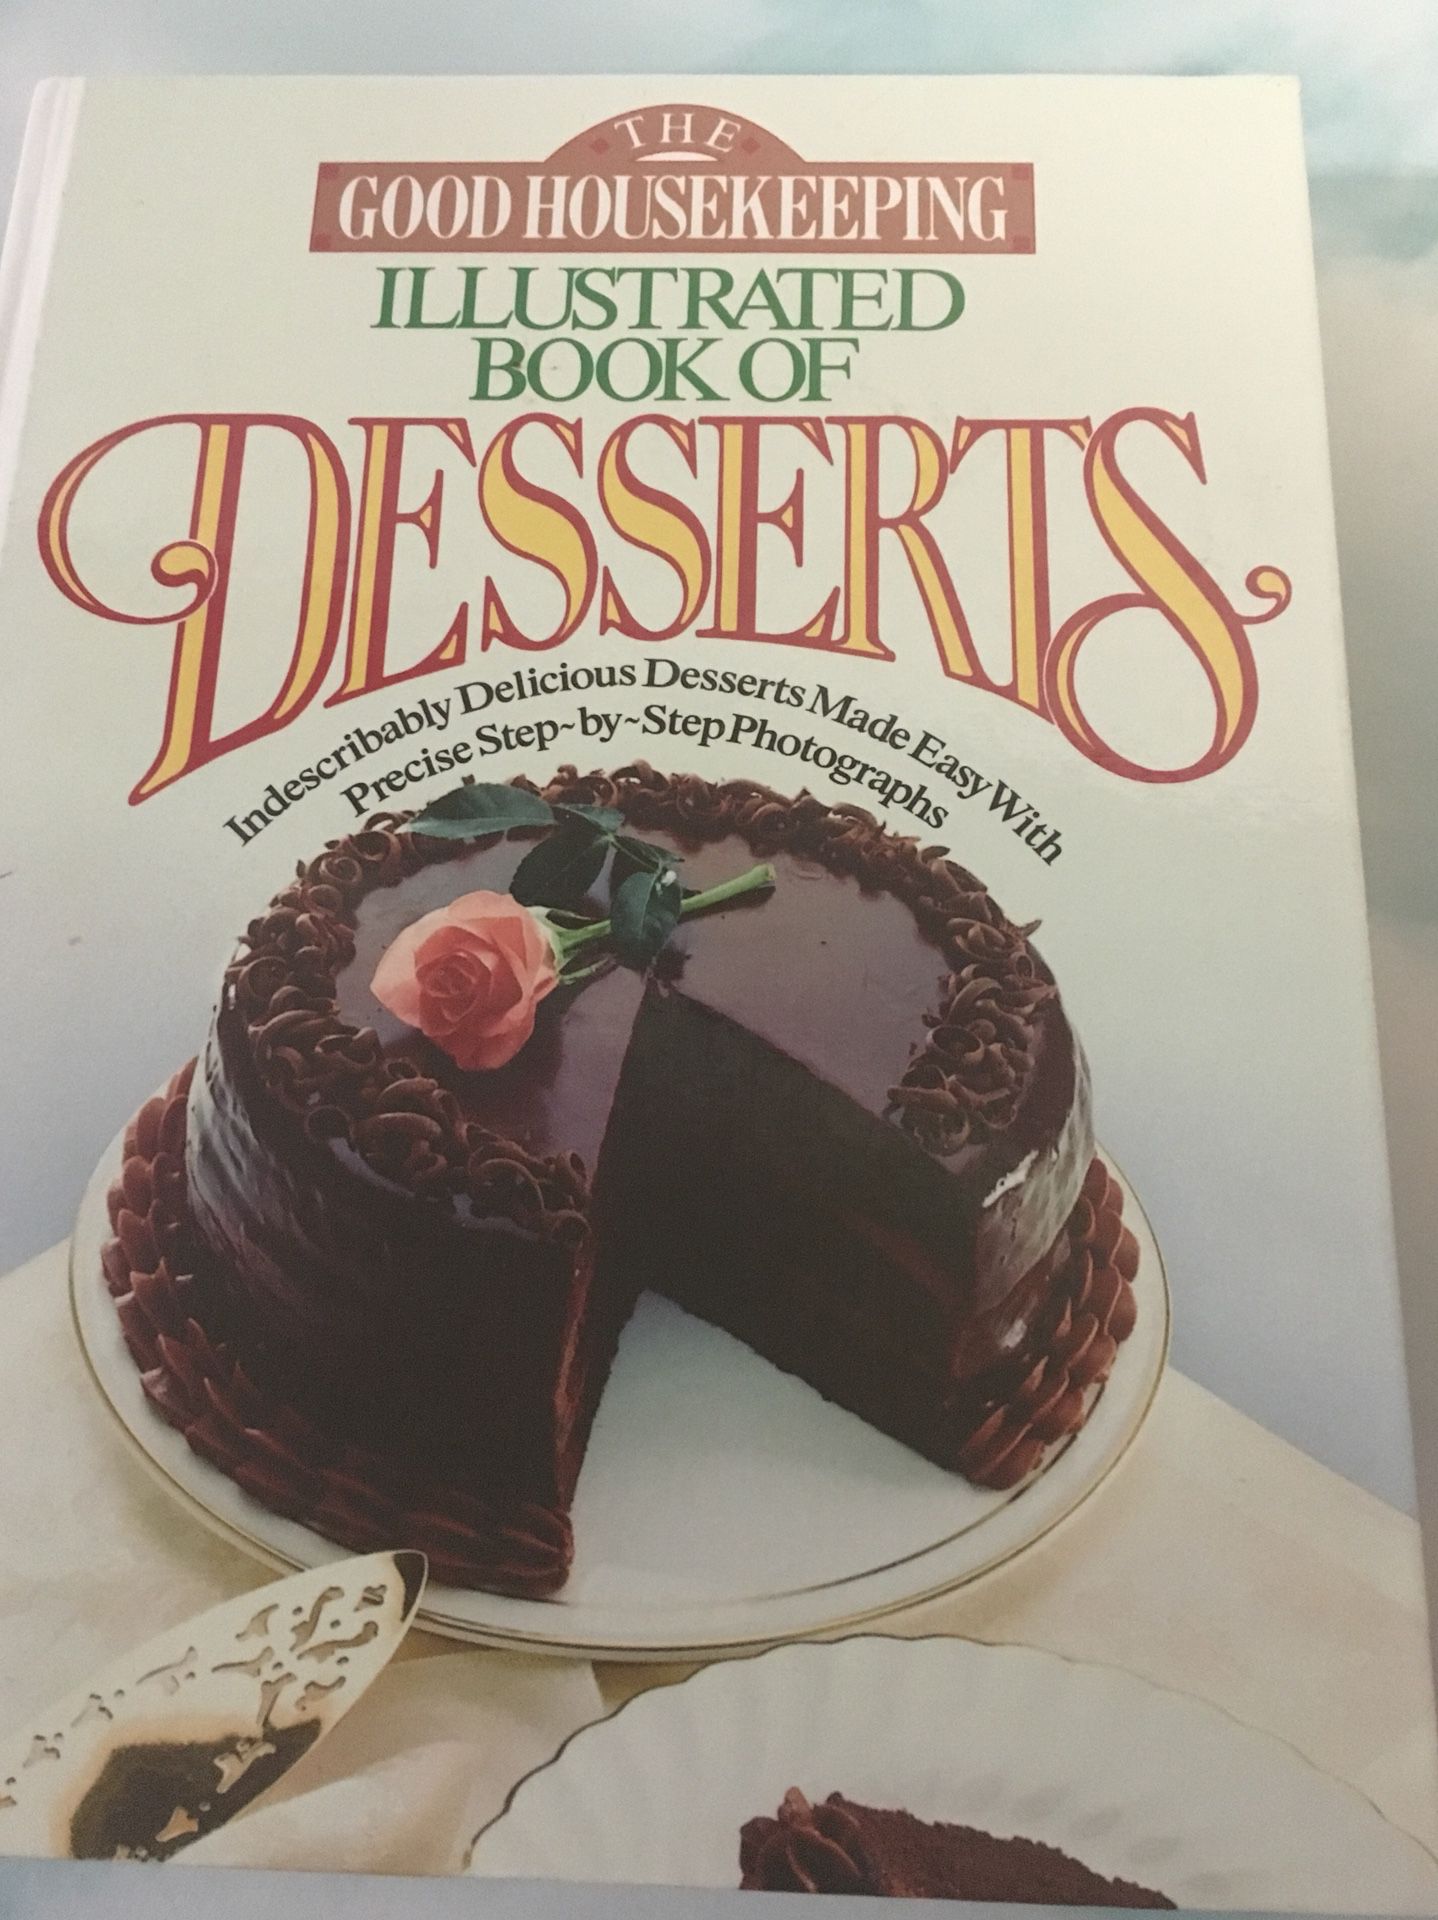 Fantastic Illustrated Book of Dessert Recipes